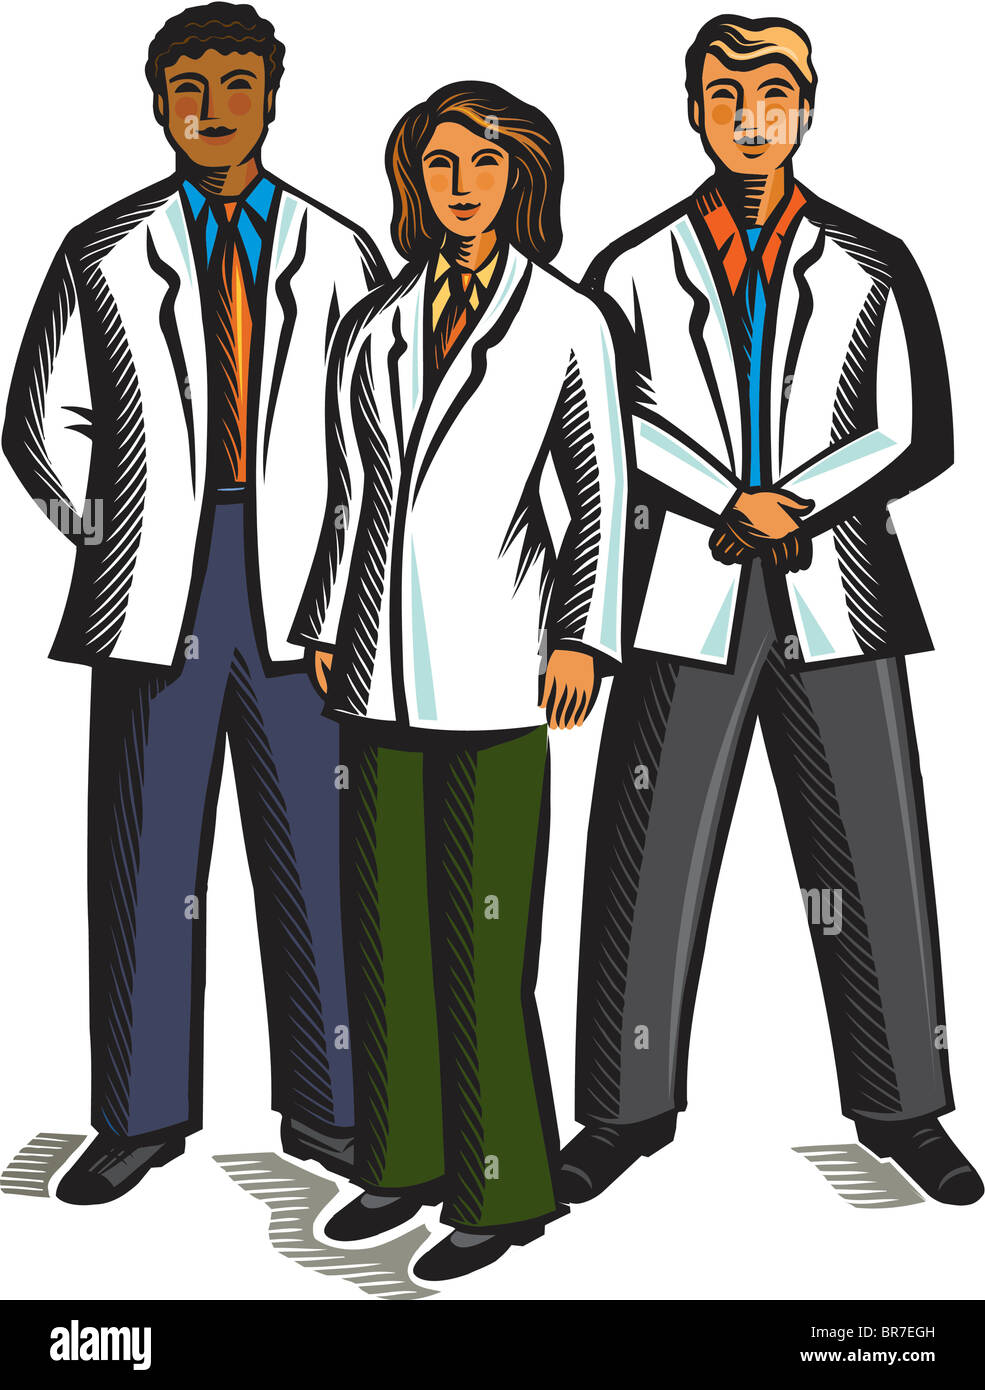 Three medical professionals Stock Photo